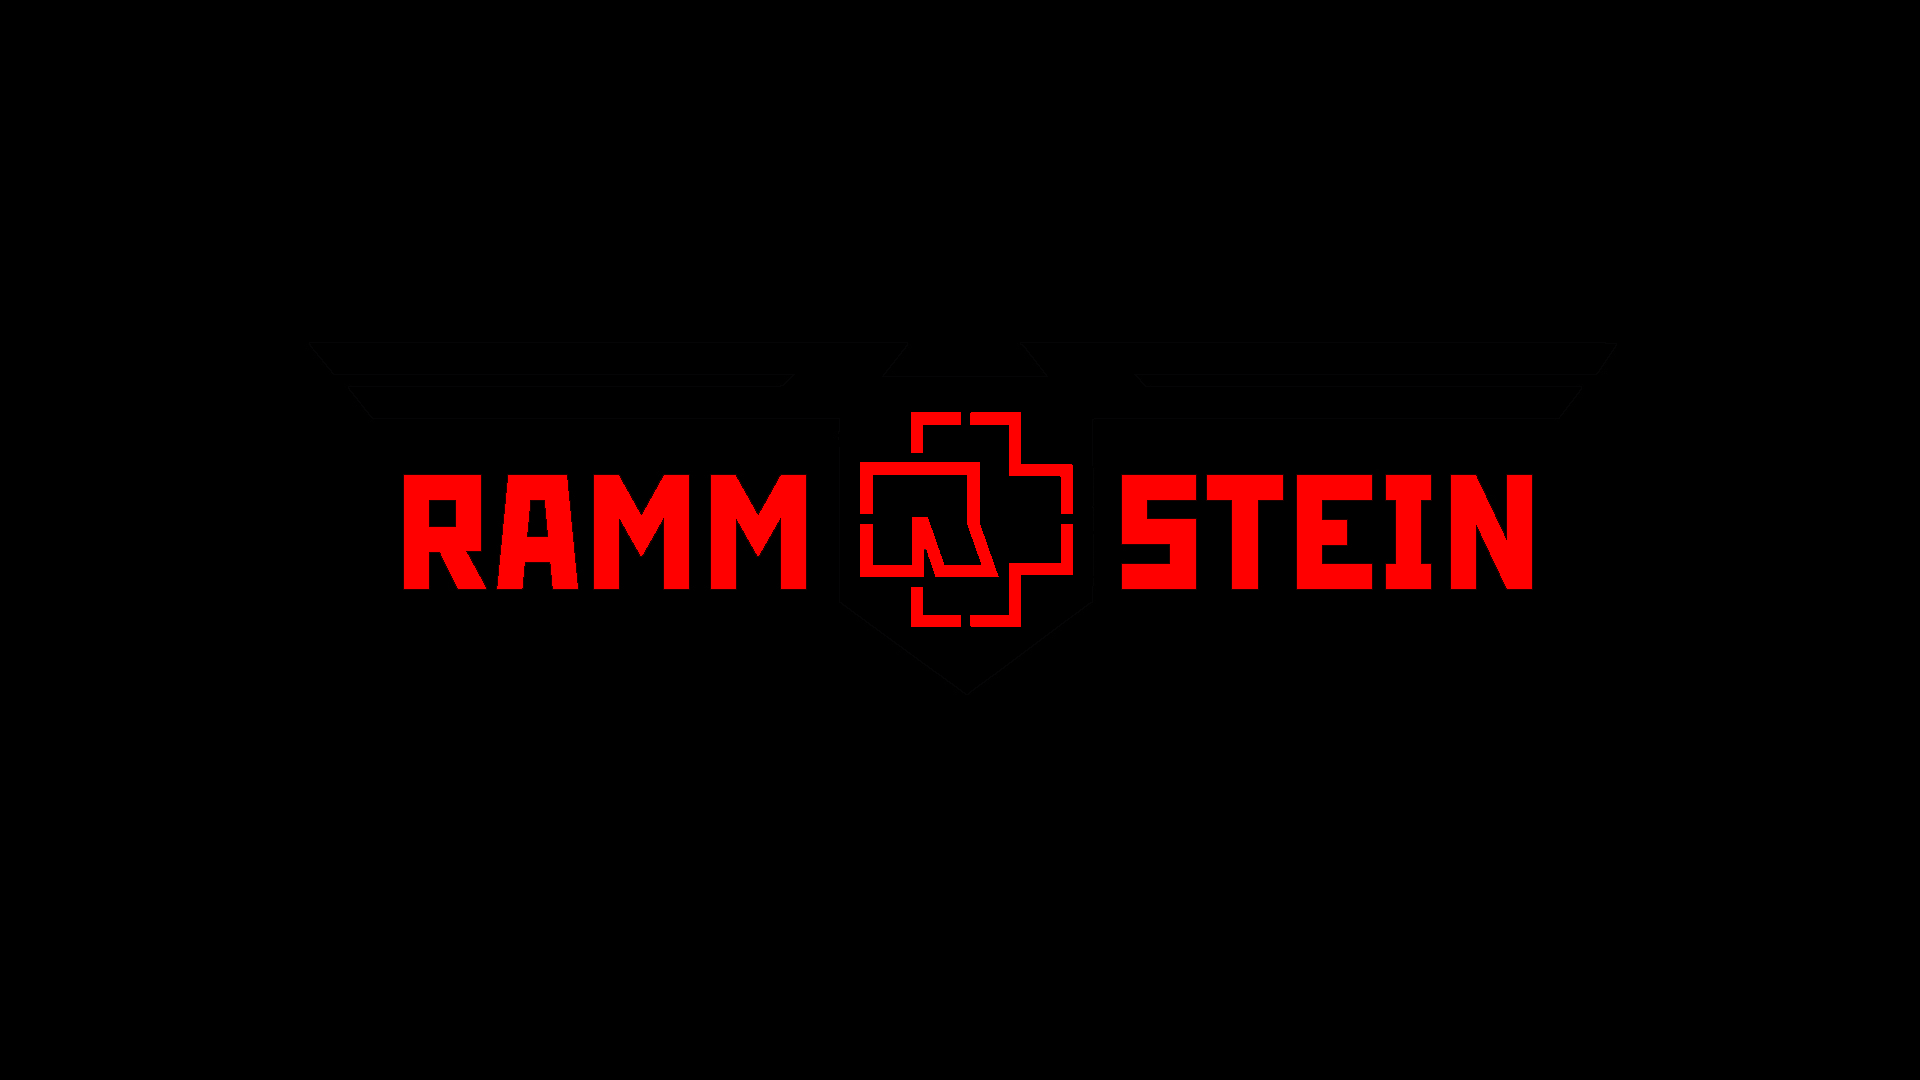 Rammstein HD Wallpaper free